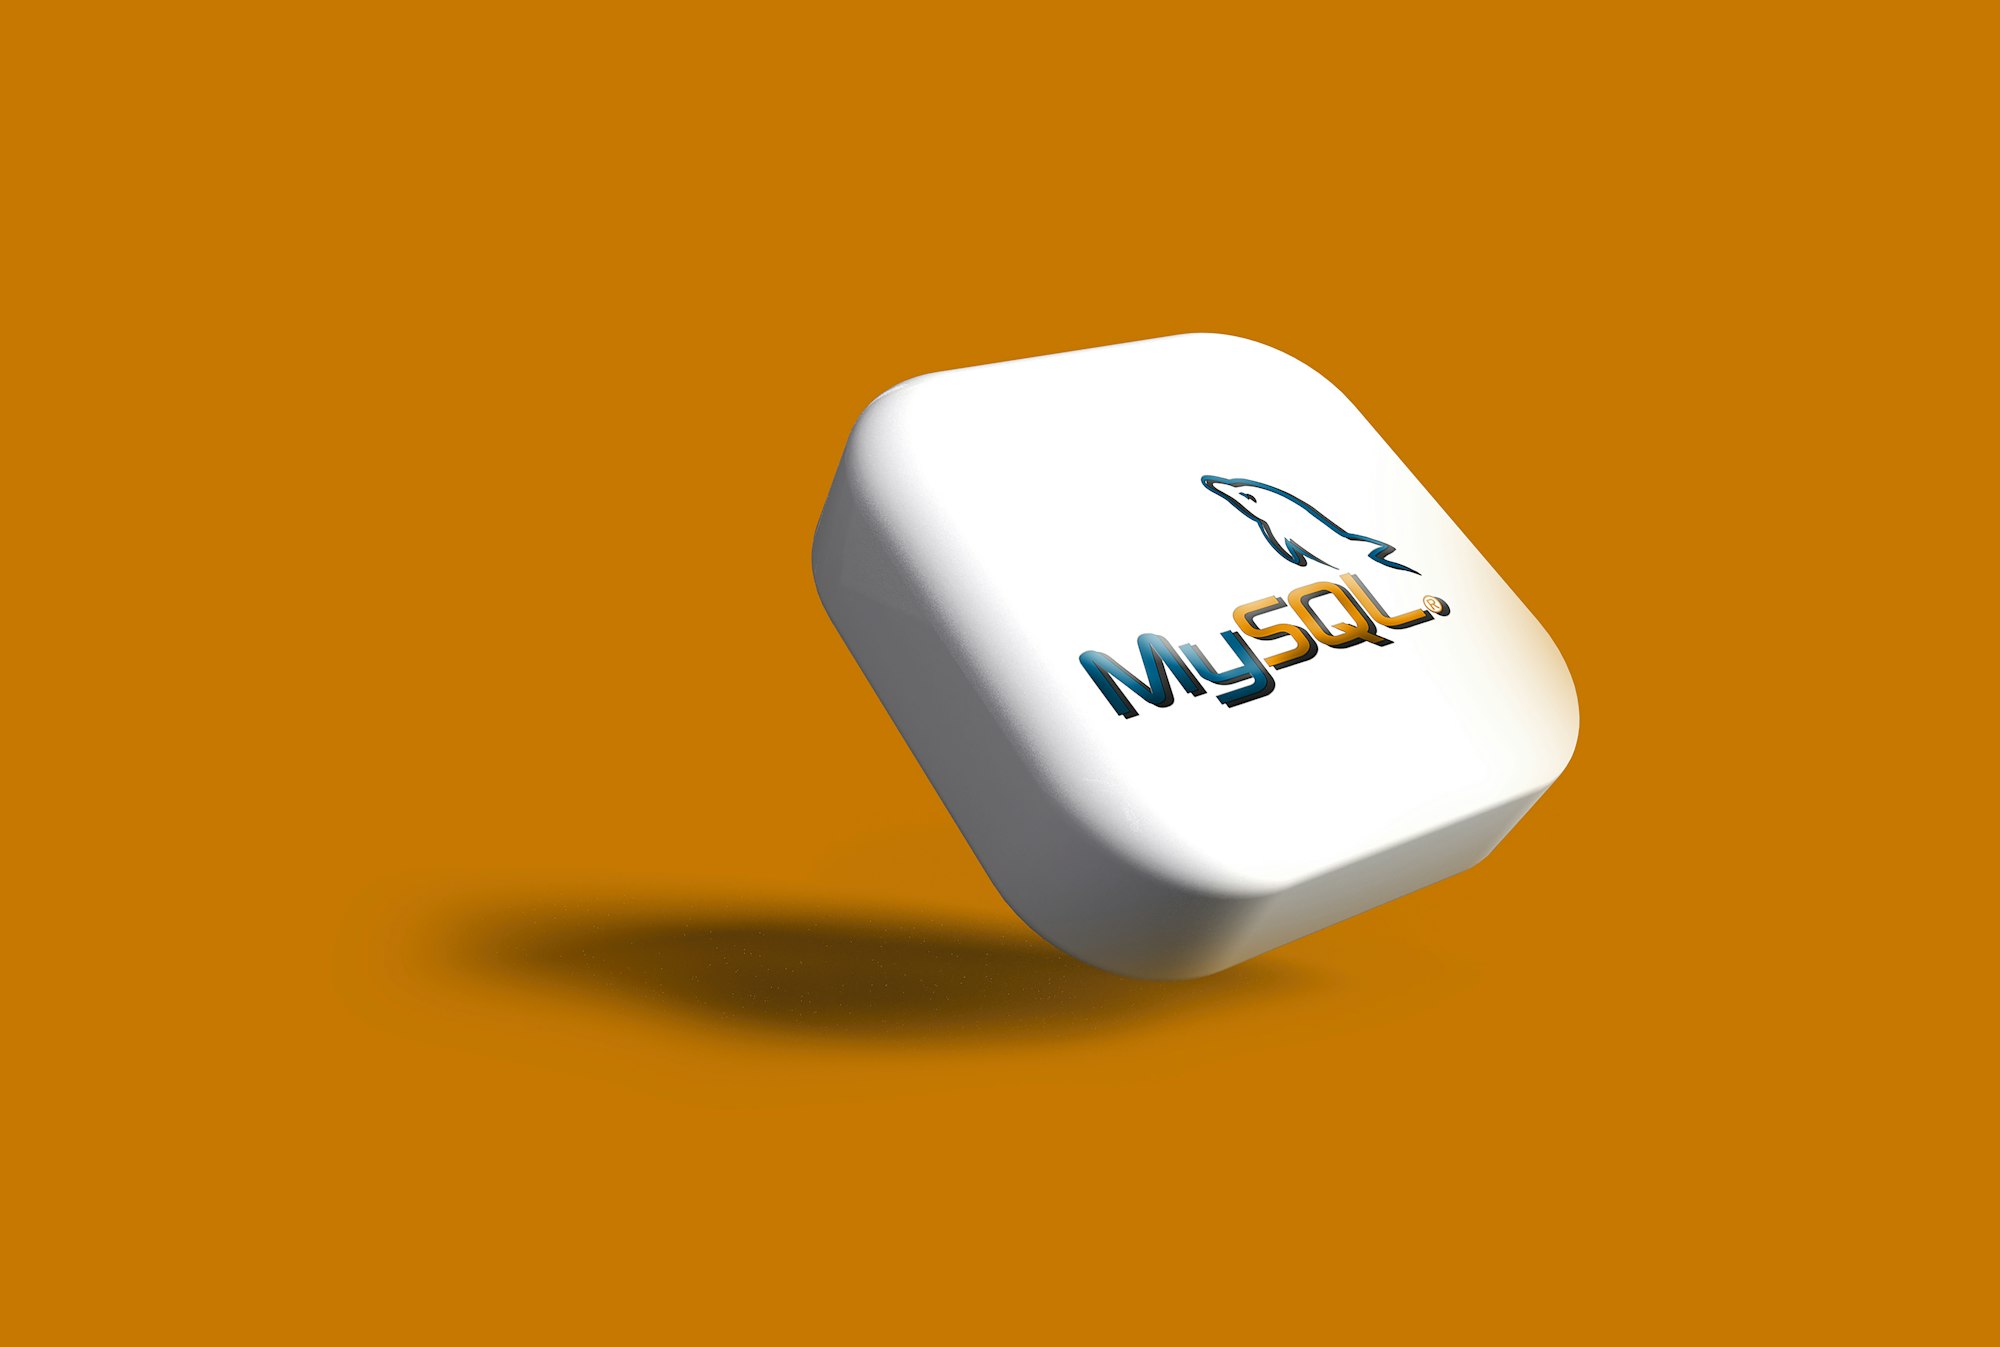 The Best 10 MySQL GUI Clients for Mac OS X